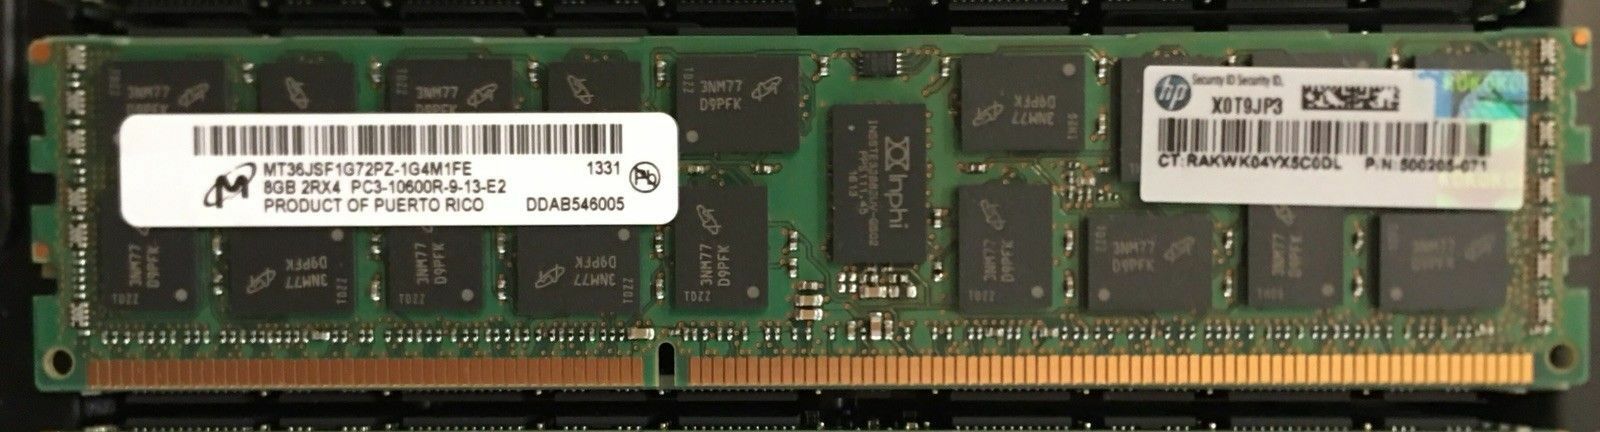 Micron 8GB 2Rx4 PC3-10600R DDR3-1333 MT36JSF1G72PZ-1G4M 500205-071 RedByte